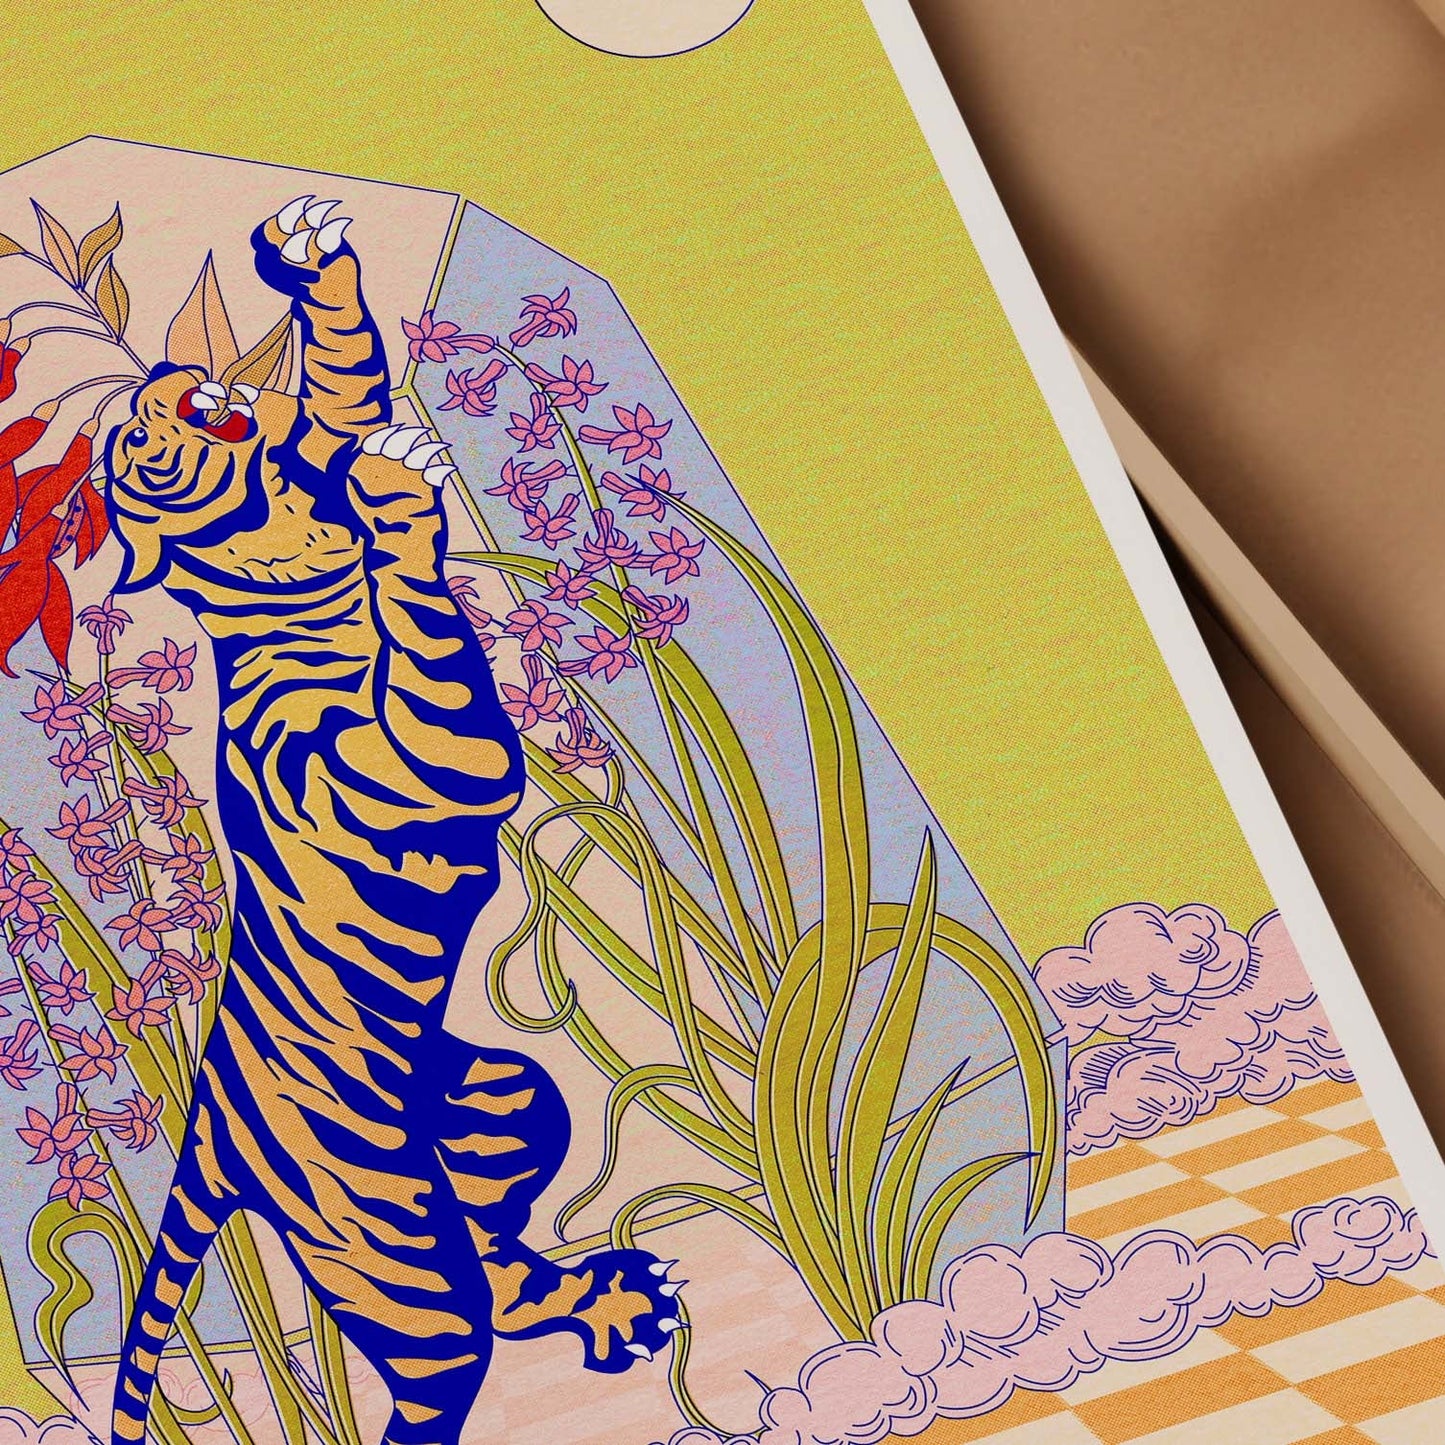 'Tiger Terrarium' Art Print - OMG KITTY